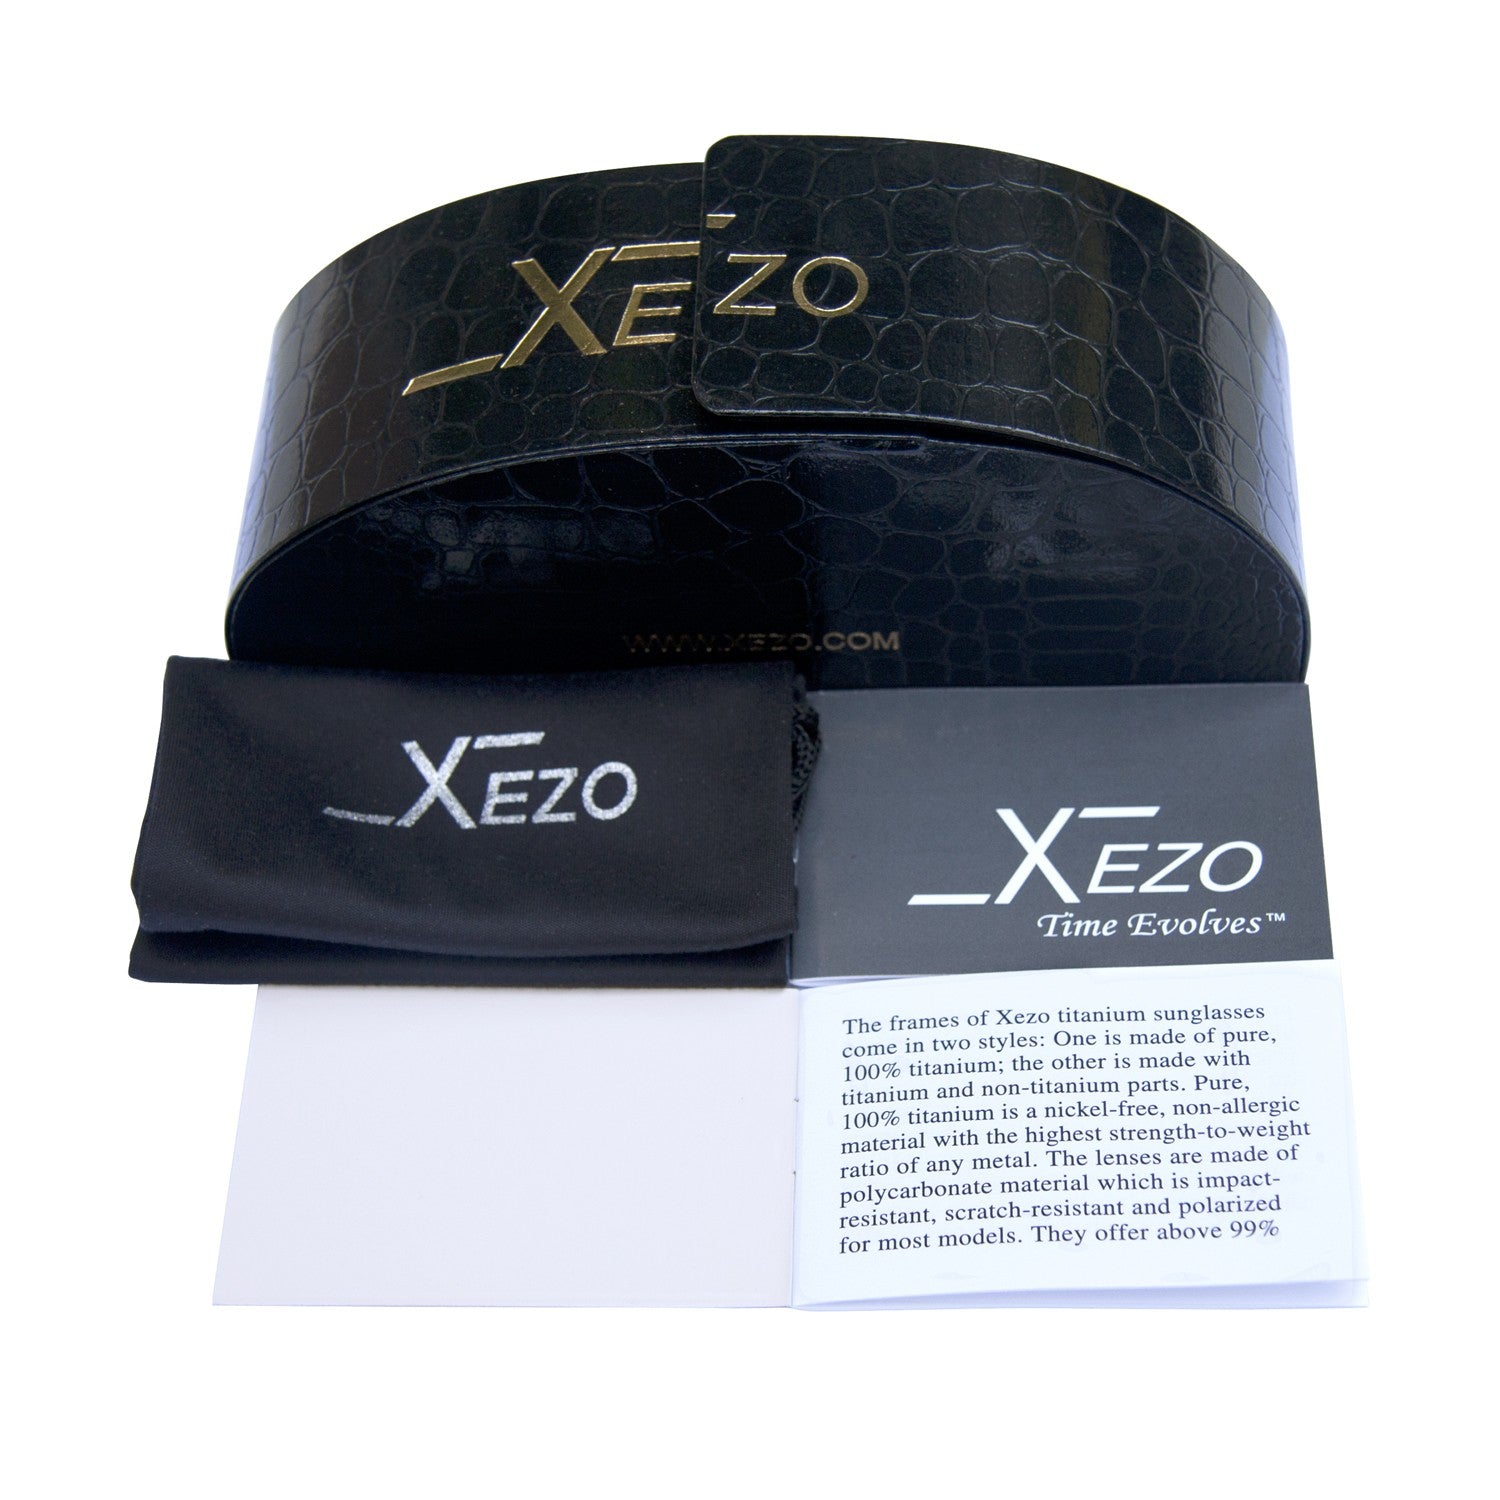 Xezo - Black gift box, black bag, and certificate of the Airman 2002 R sunglasses